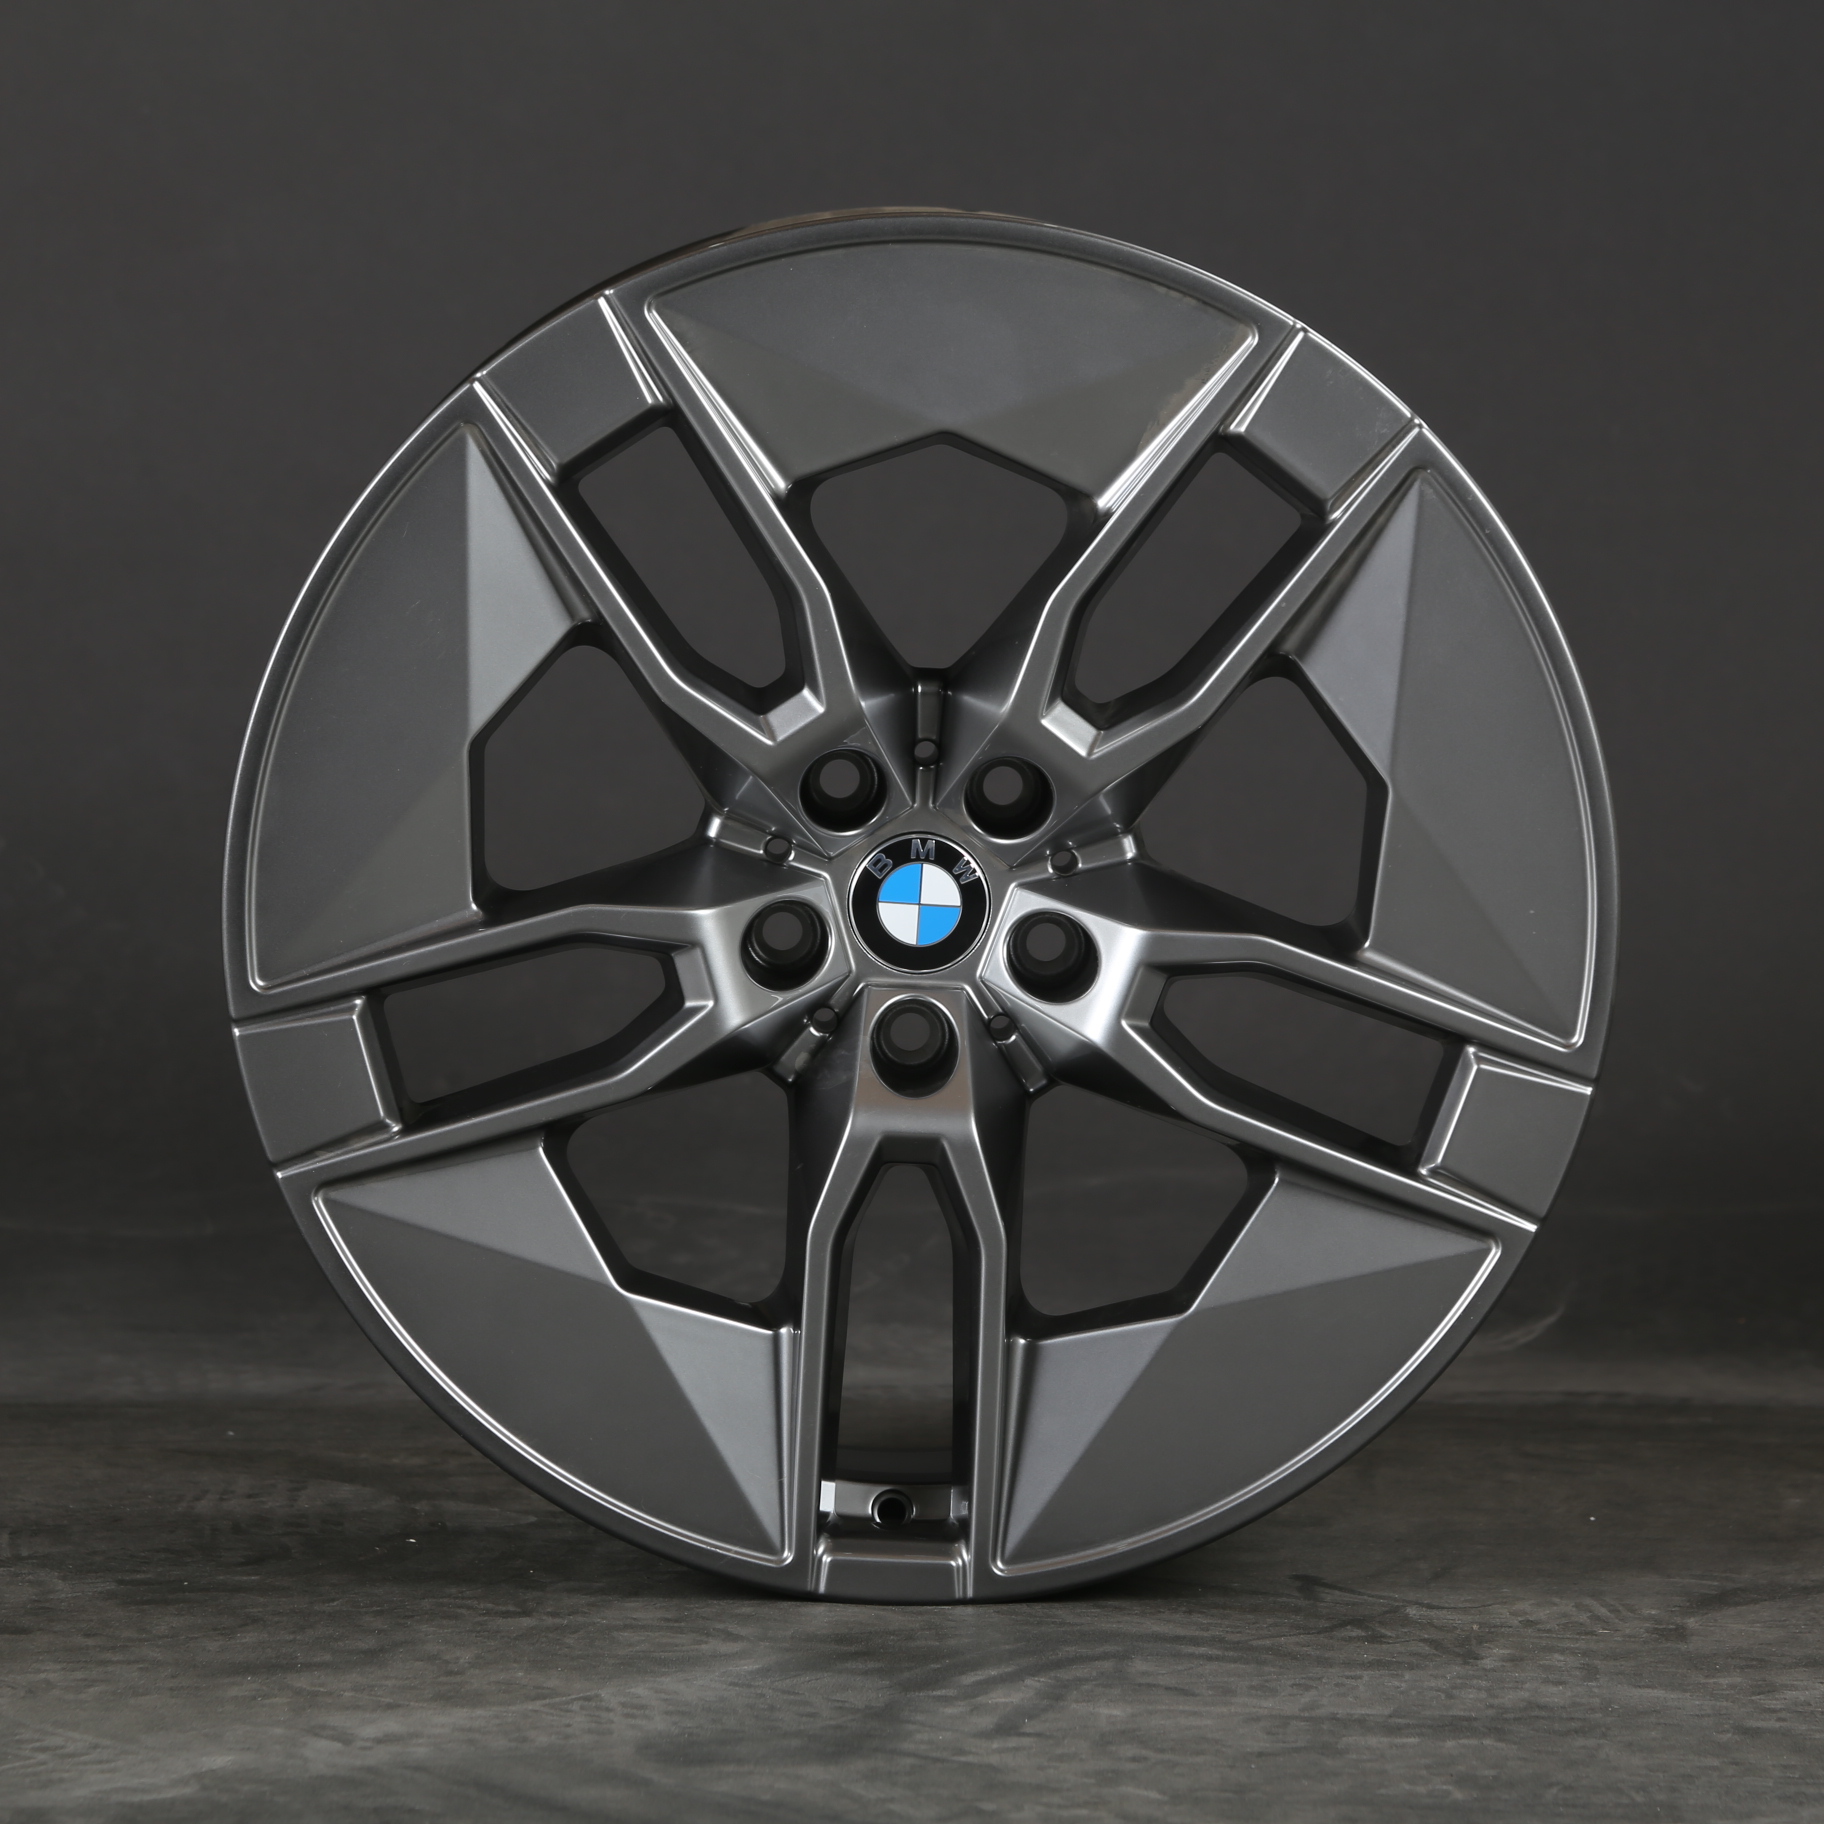 20-inch origineel wiel BMW IX I20 Styling 1002 Aerodynamics 36115A02653 Aluminium velg